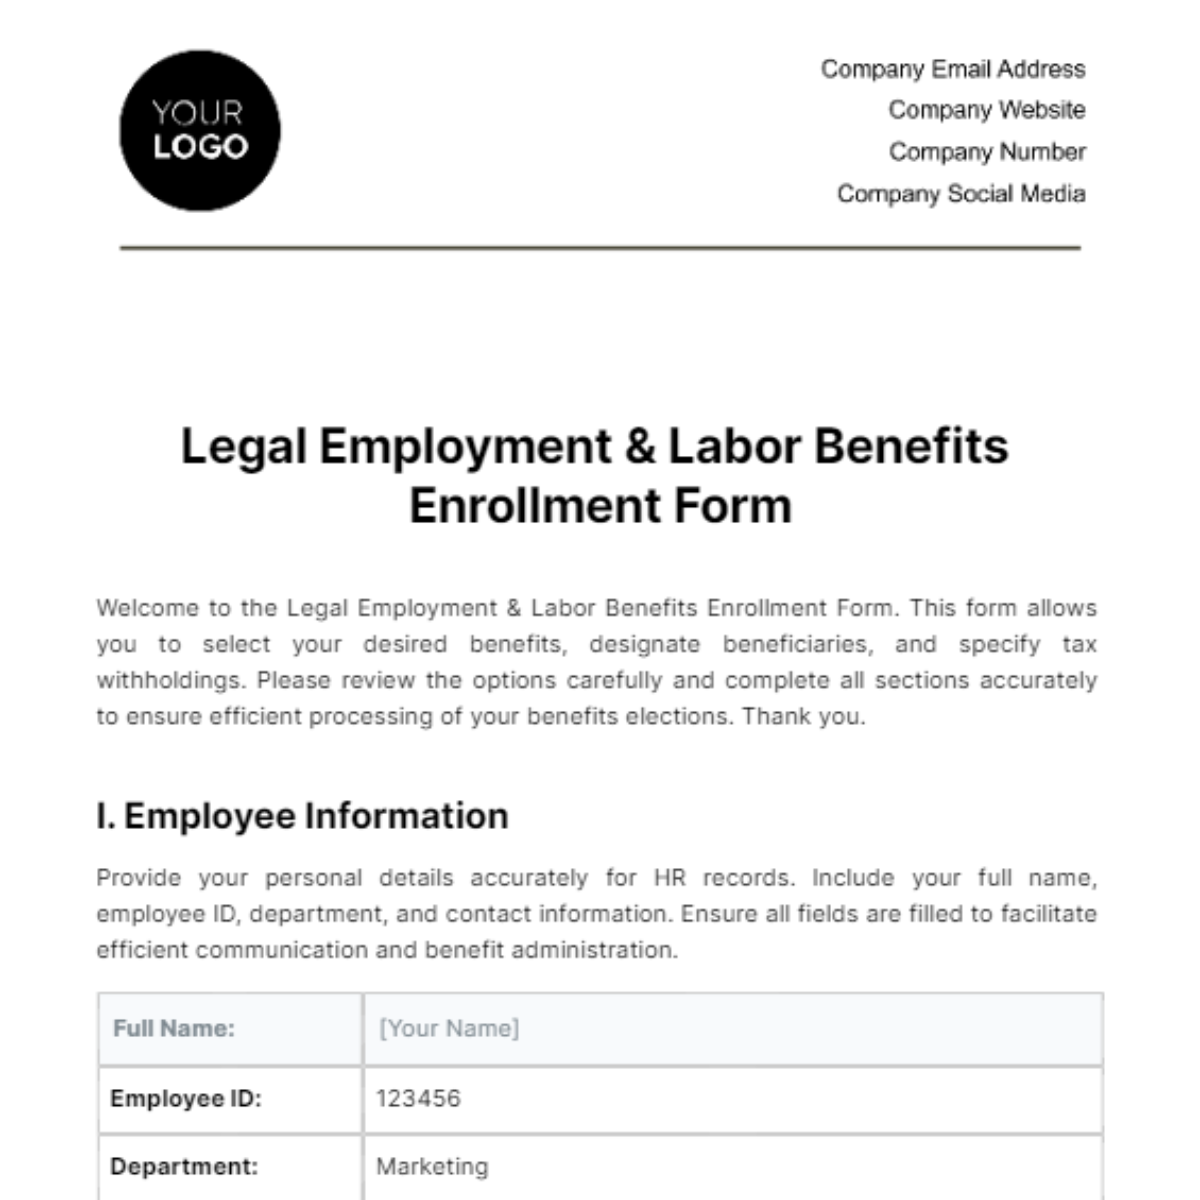 Free Legal Employment & Labor Benefits Enrollment Form Template